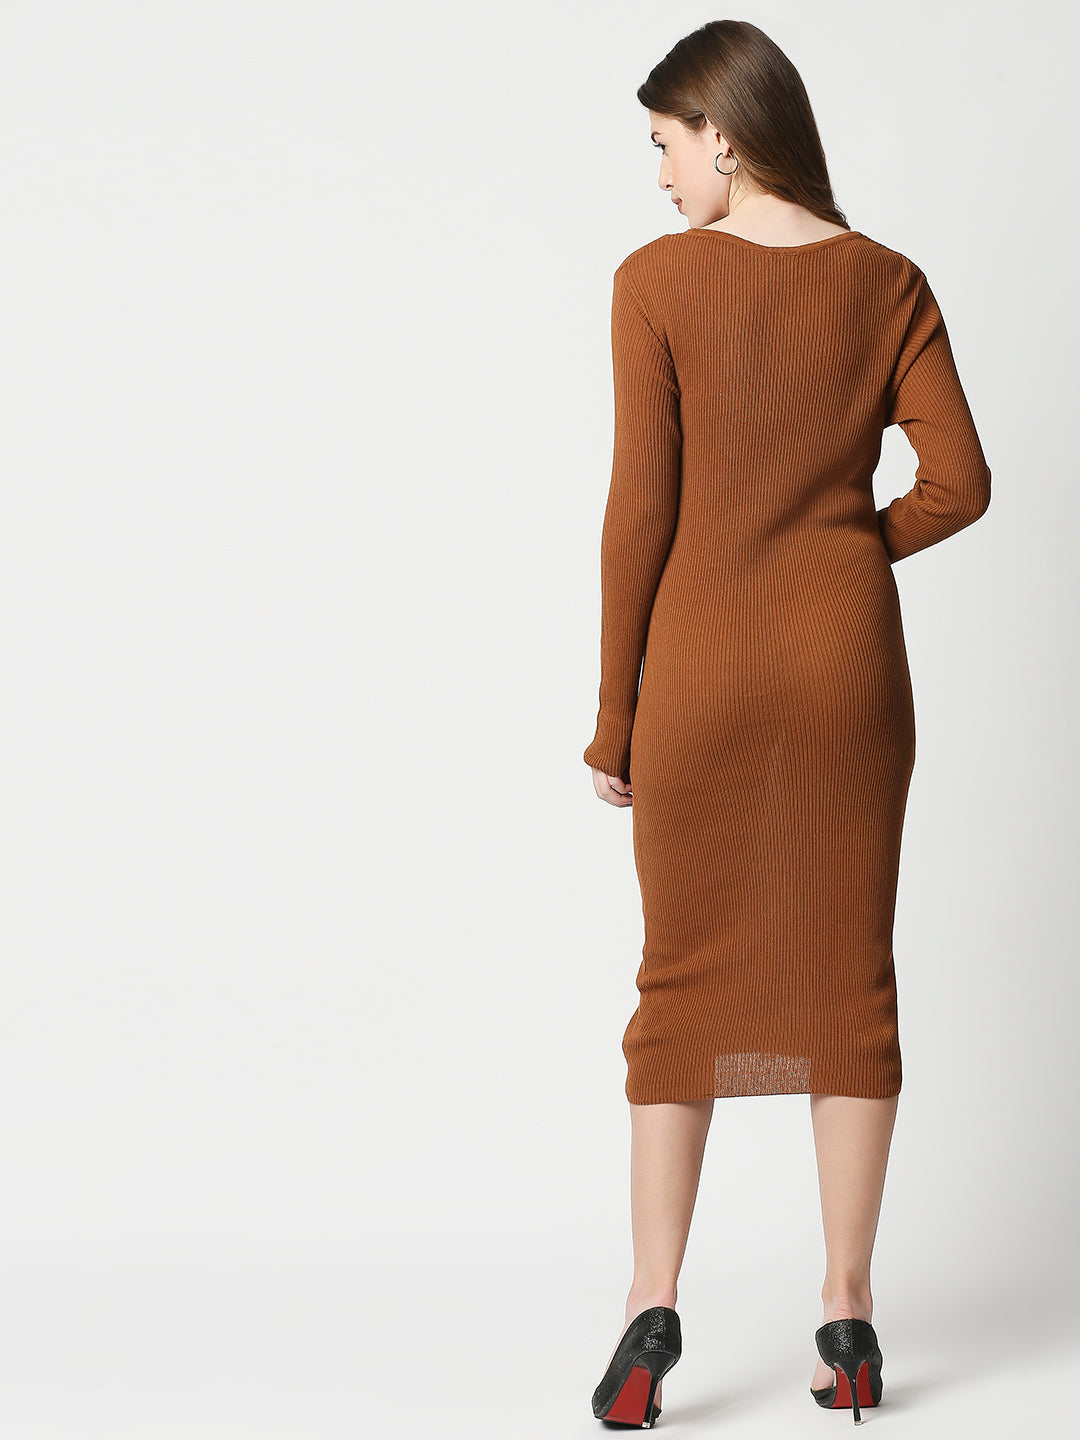 Buy Women's Flat knit Dark Brown Full Sleeves Dress